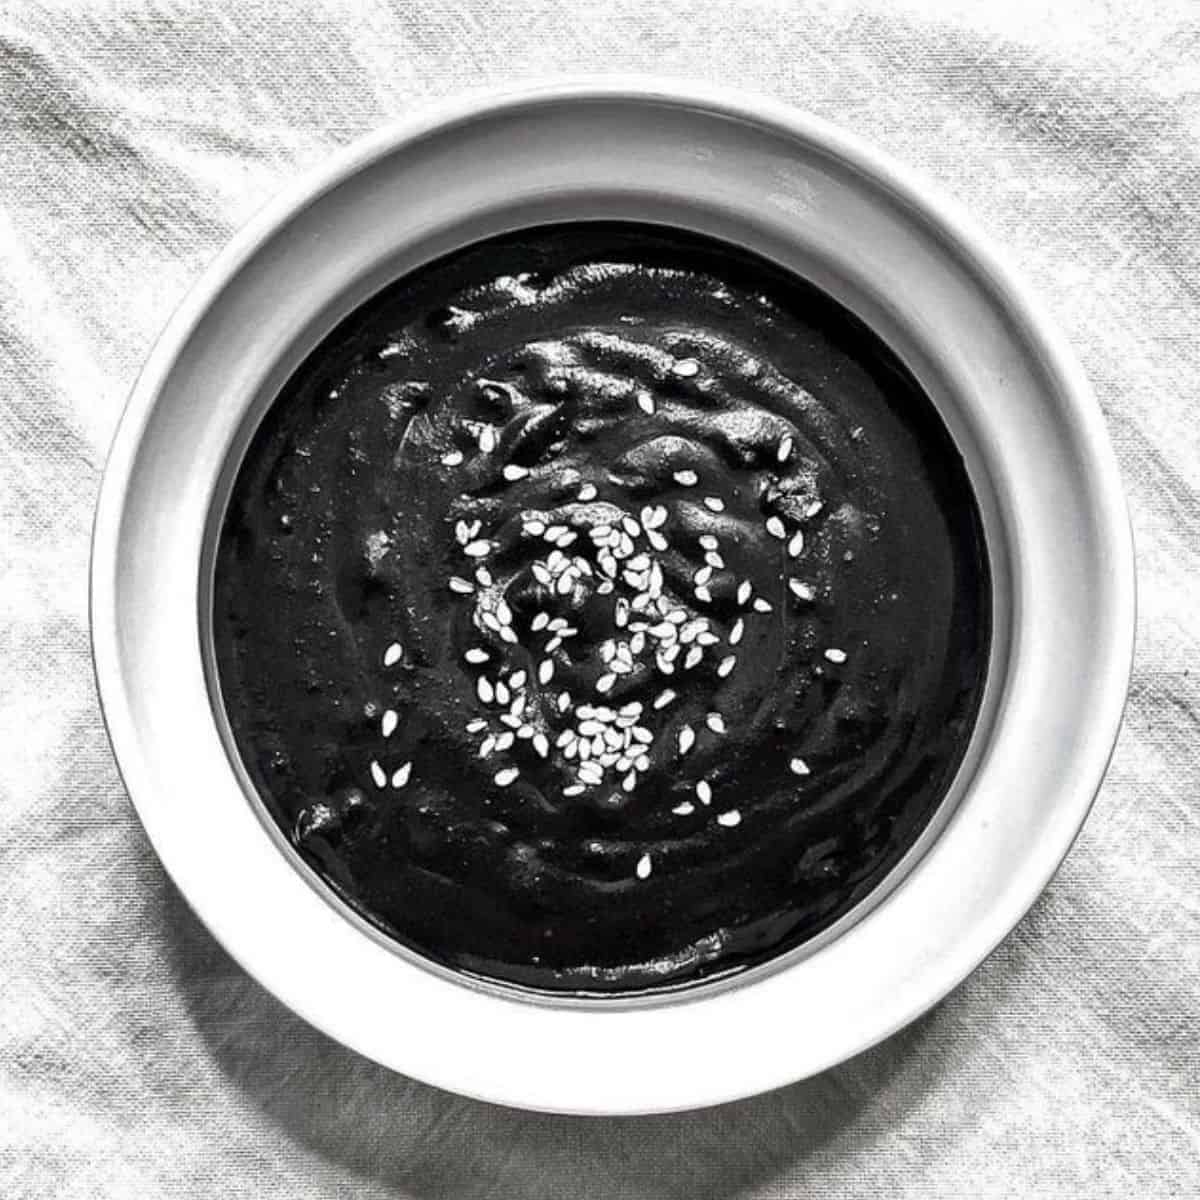 Black Sesame Paste Recipe and Easy Uses | Honest Food Talks